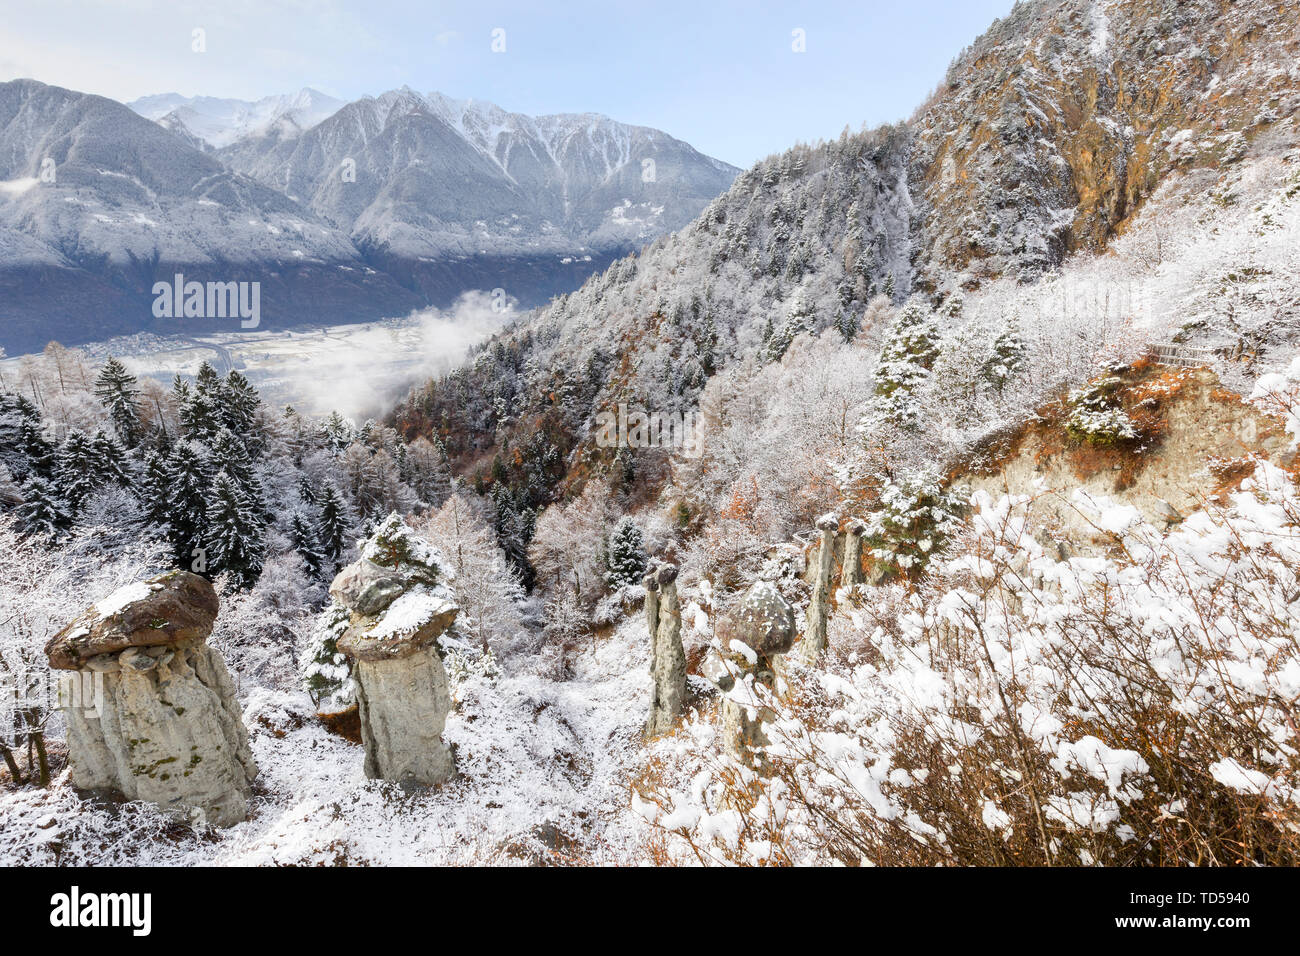 Hoodoos of Postalesio after a snowfall, Postalesio, Valtellina, Lombardy, Italy, Europe Stock Photo